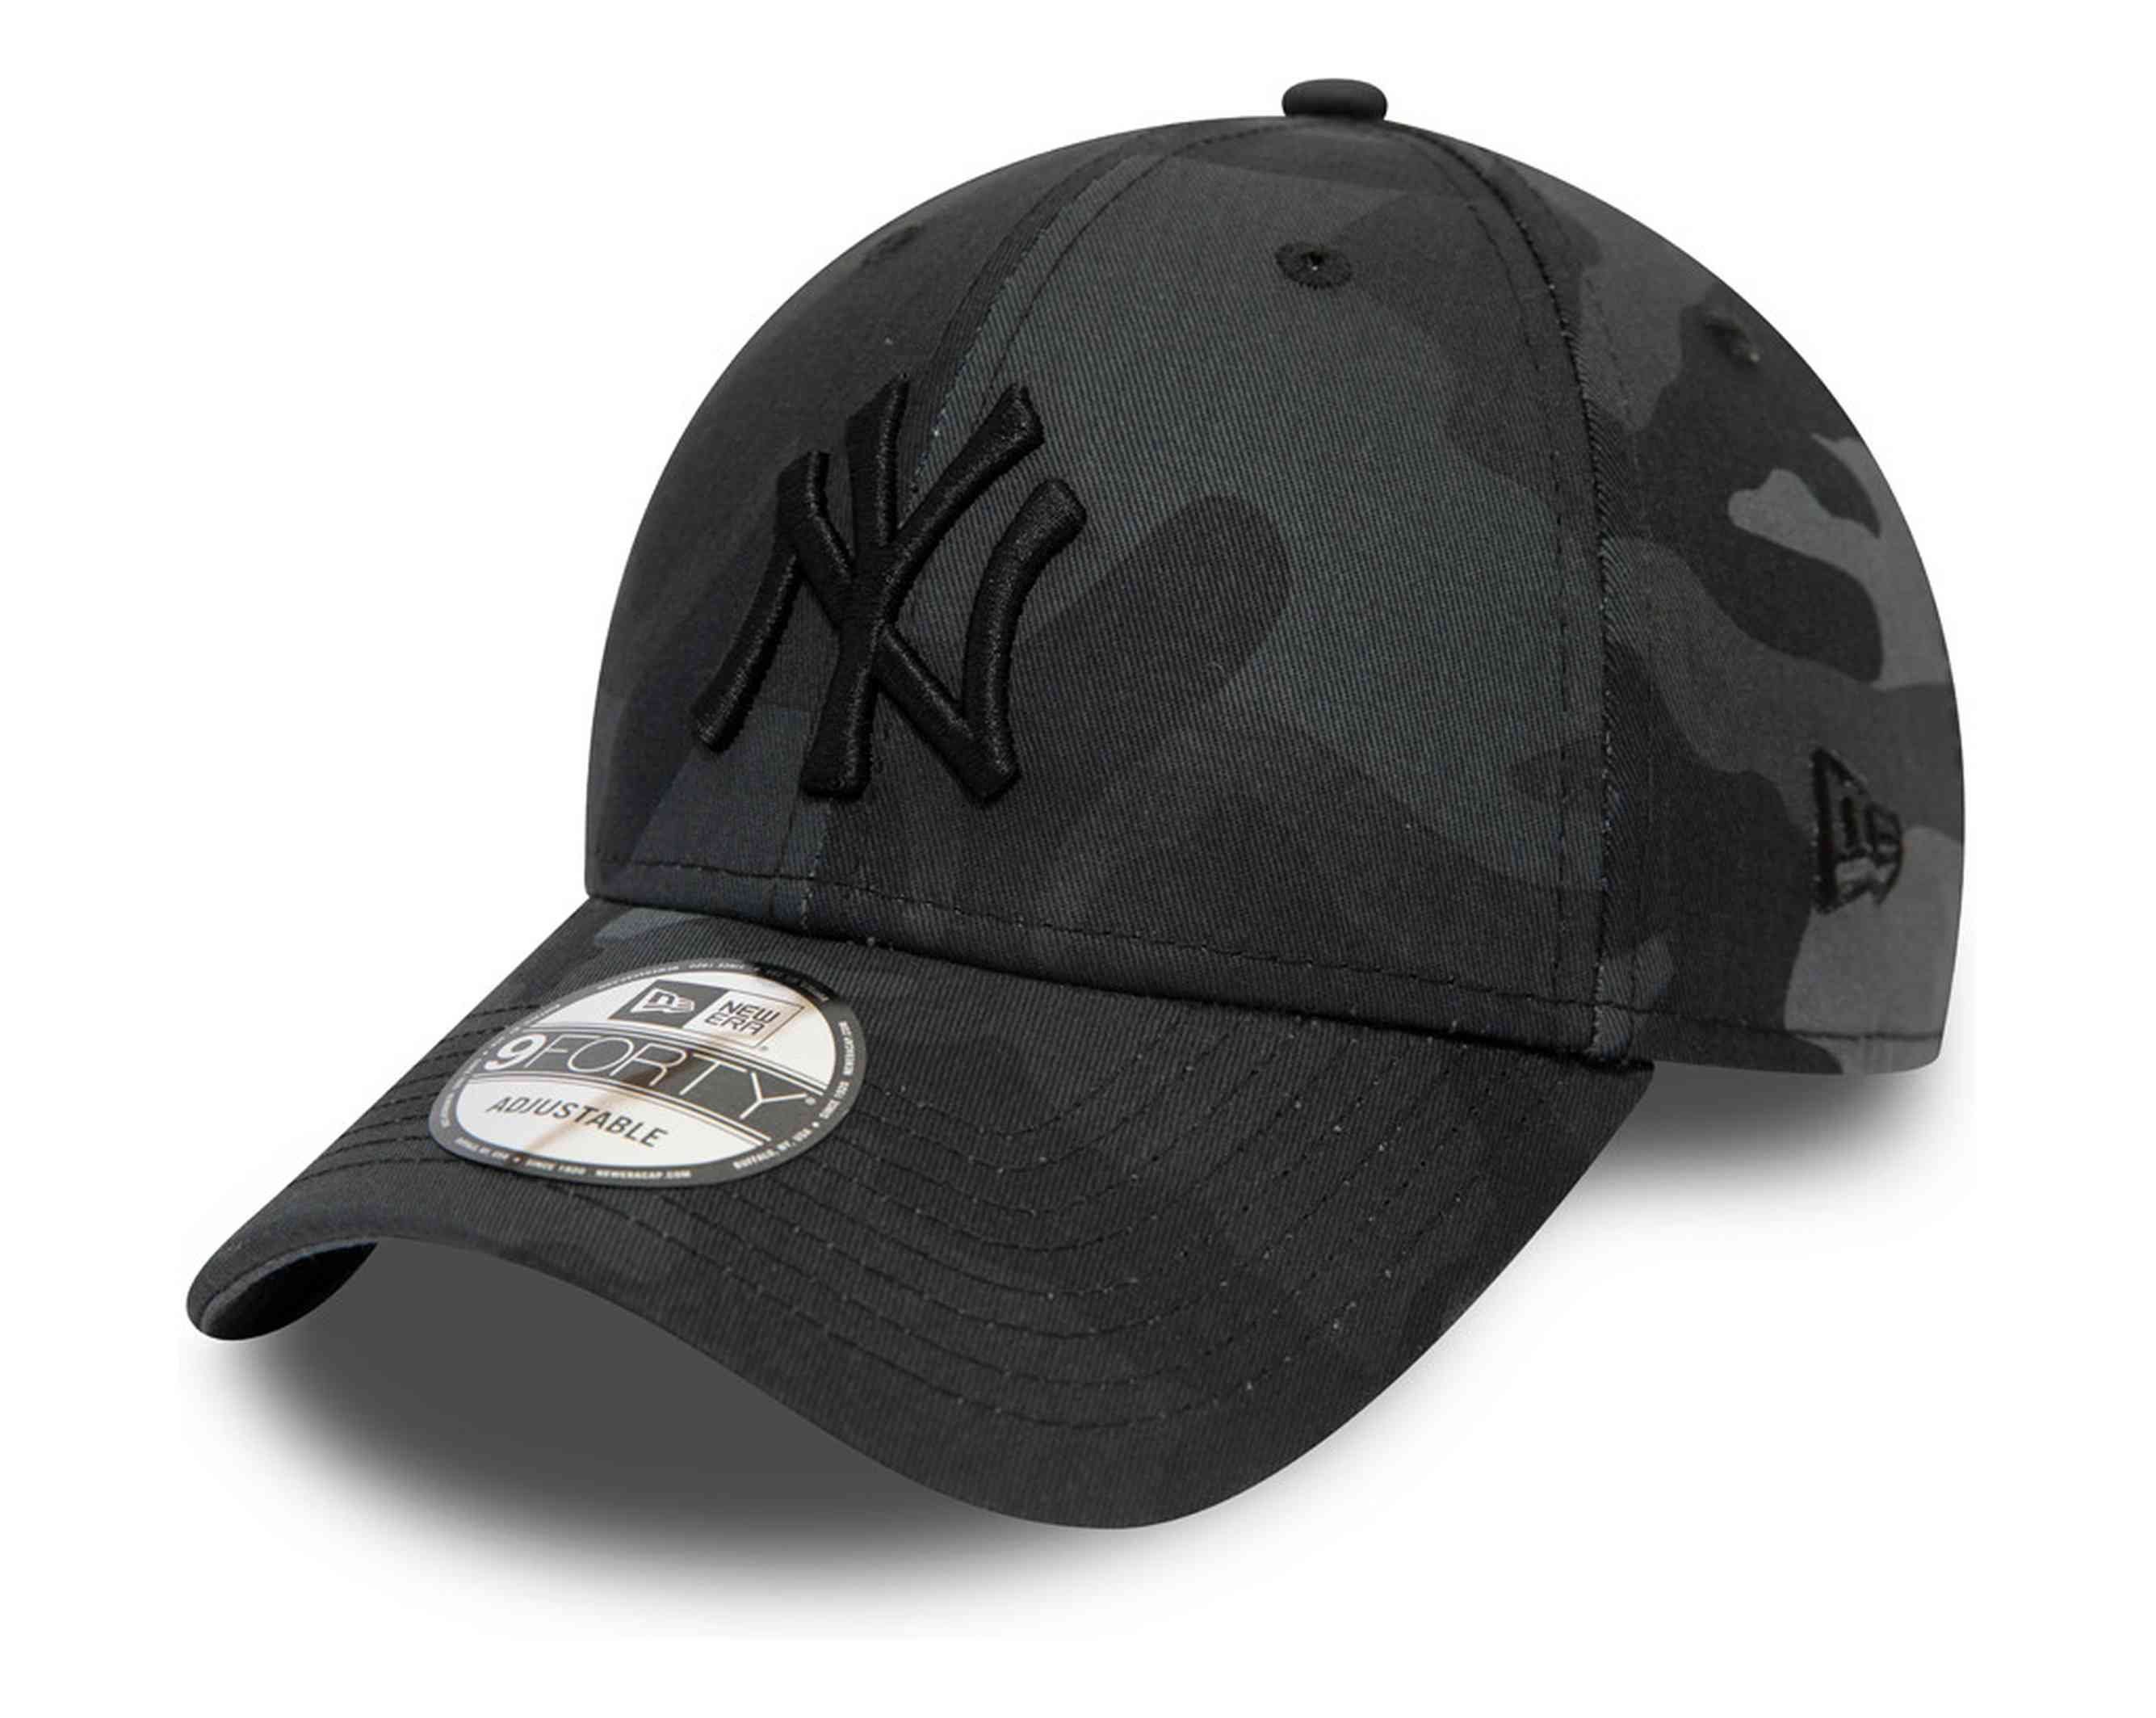 New New Snapback Essential Cap MLB York Kids Yankees 9Forty Era League